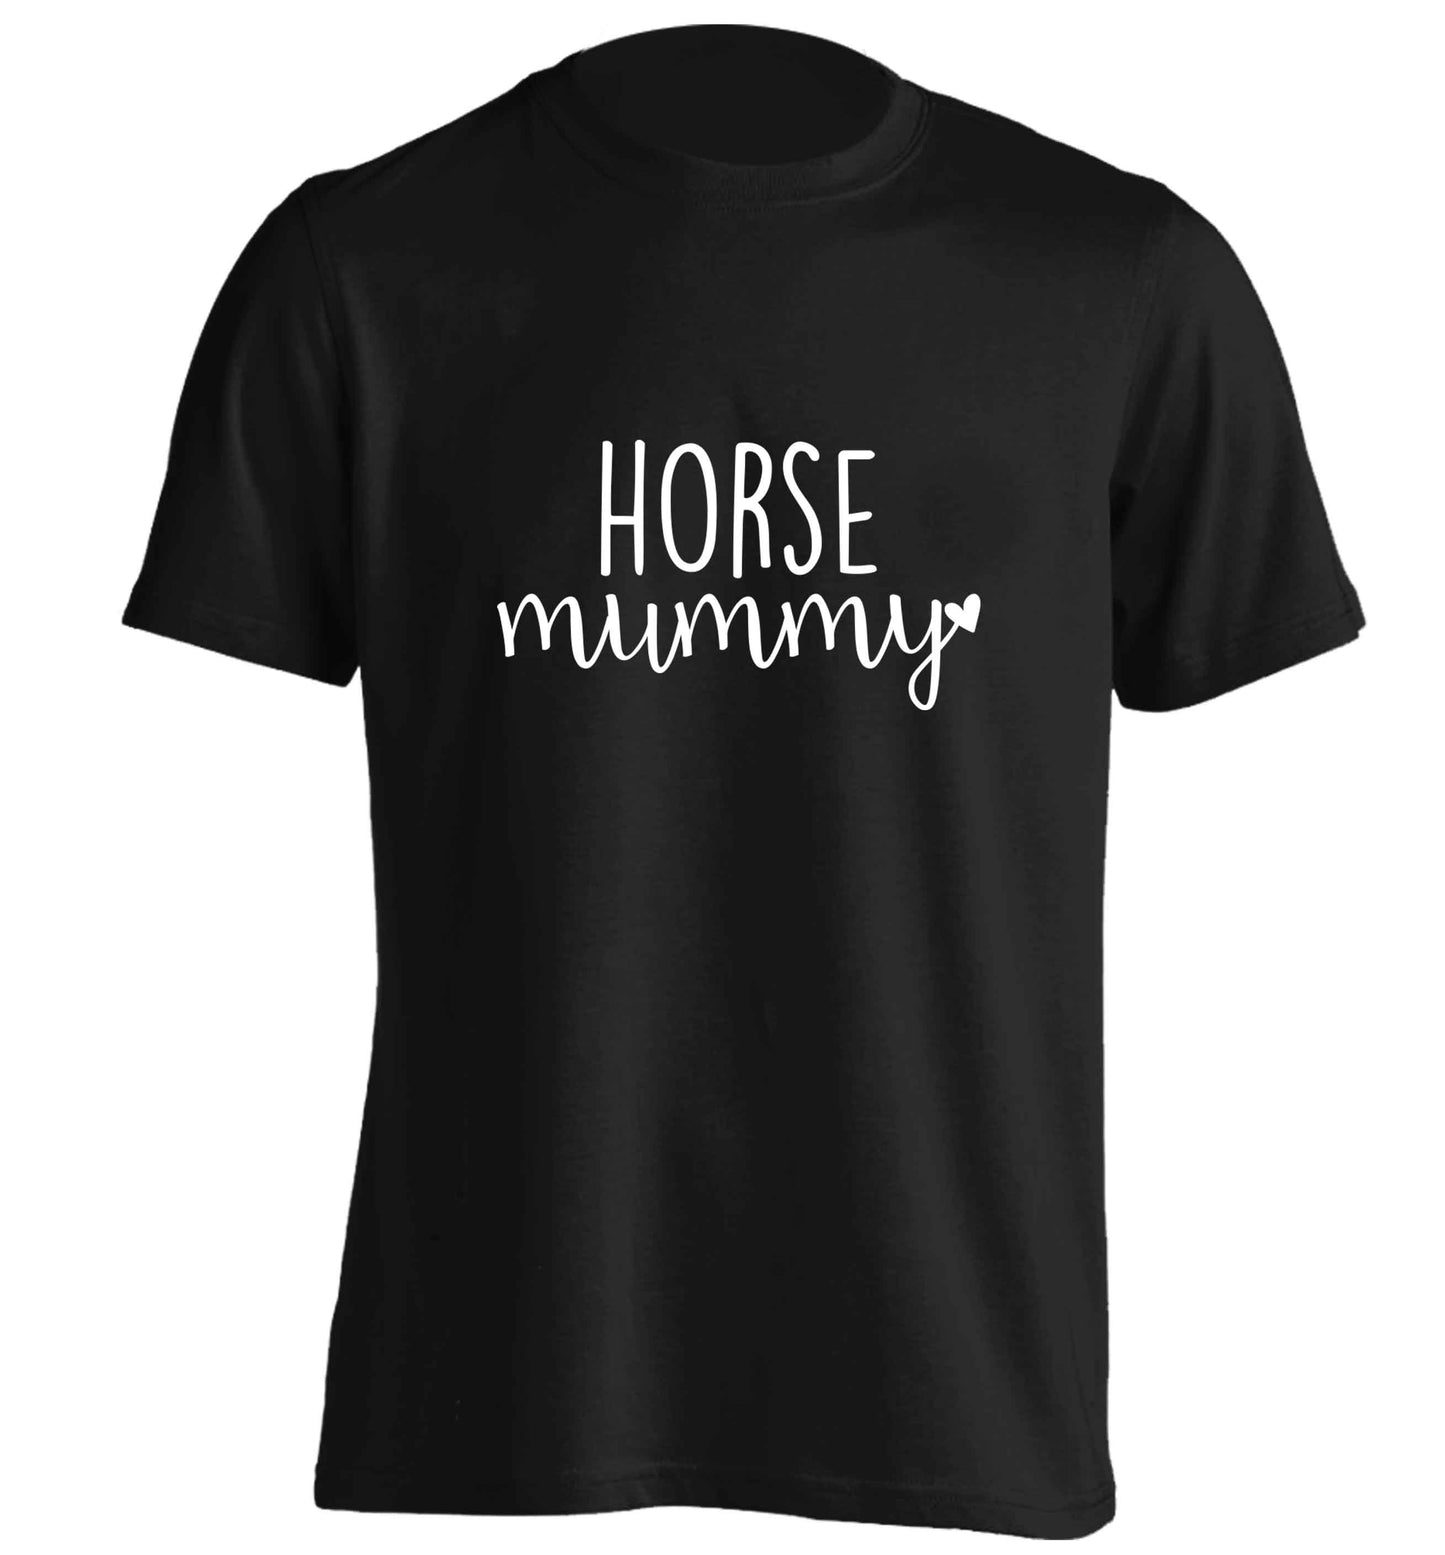 Horse mummy adults unisex black Tshirt 2XL